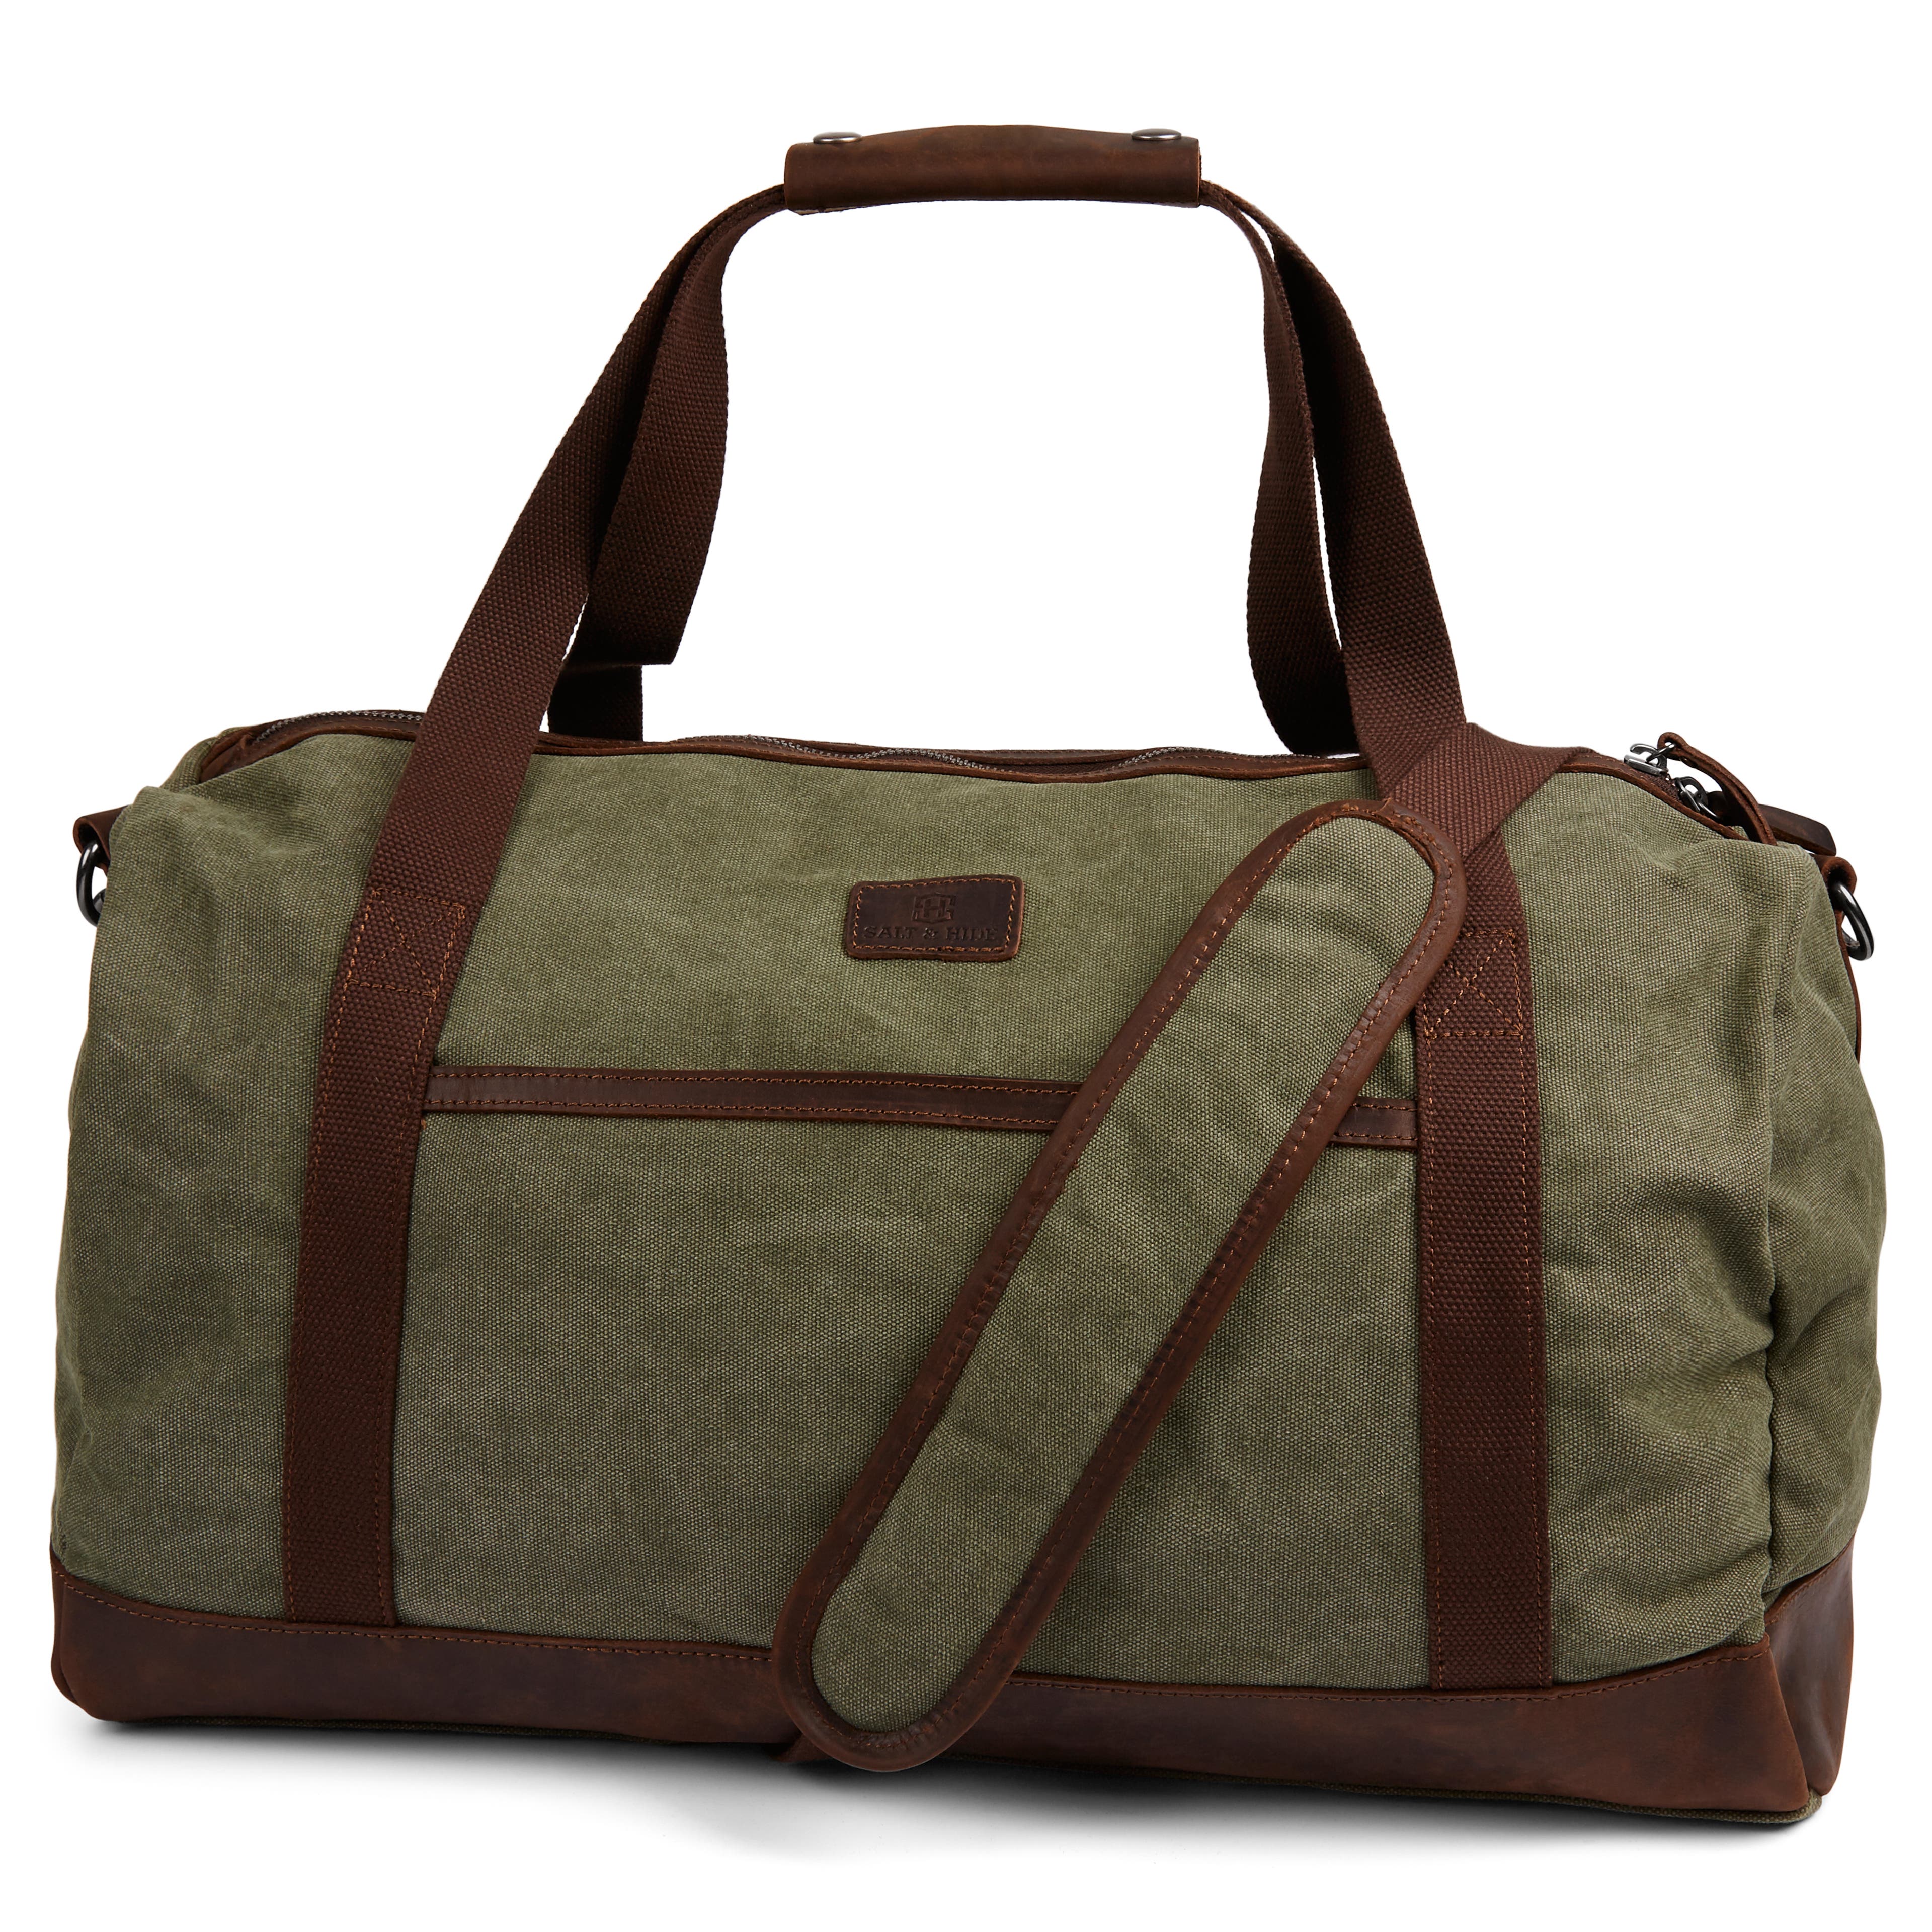 Tarpa | Olive Green & Dark Brown Canvas Duffle Bag